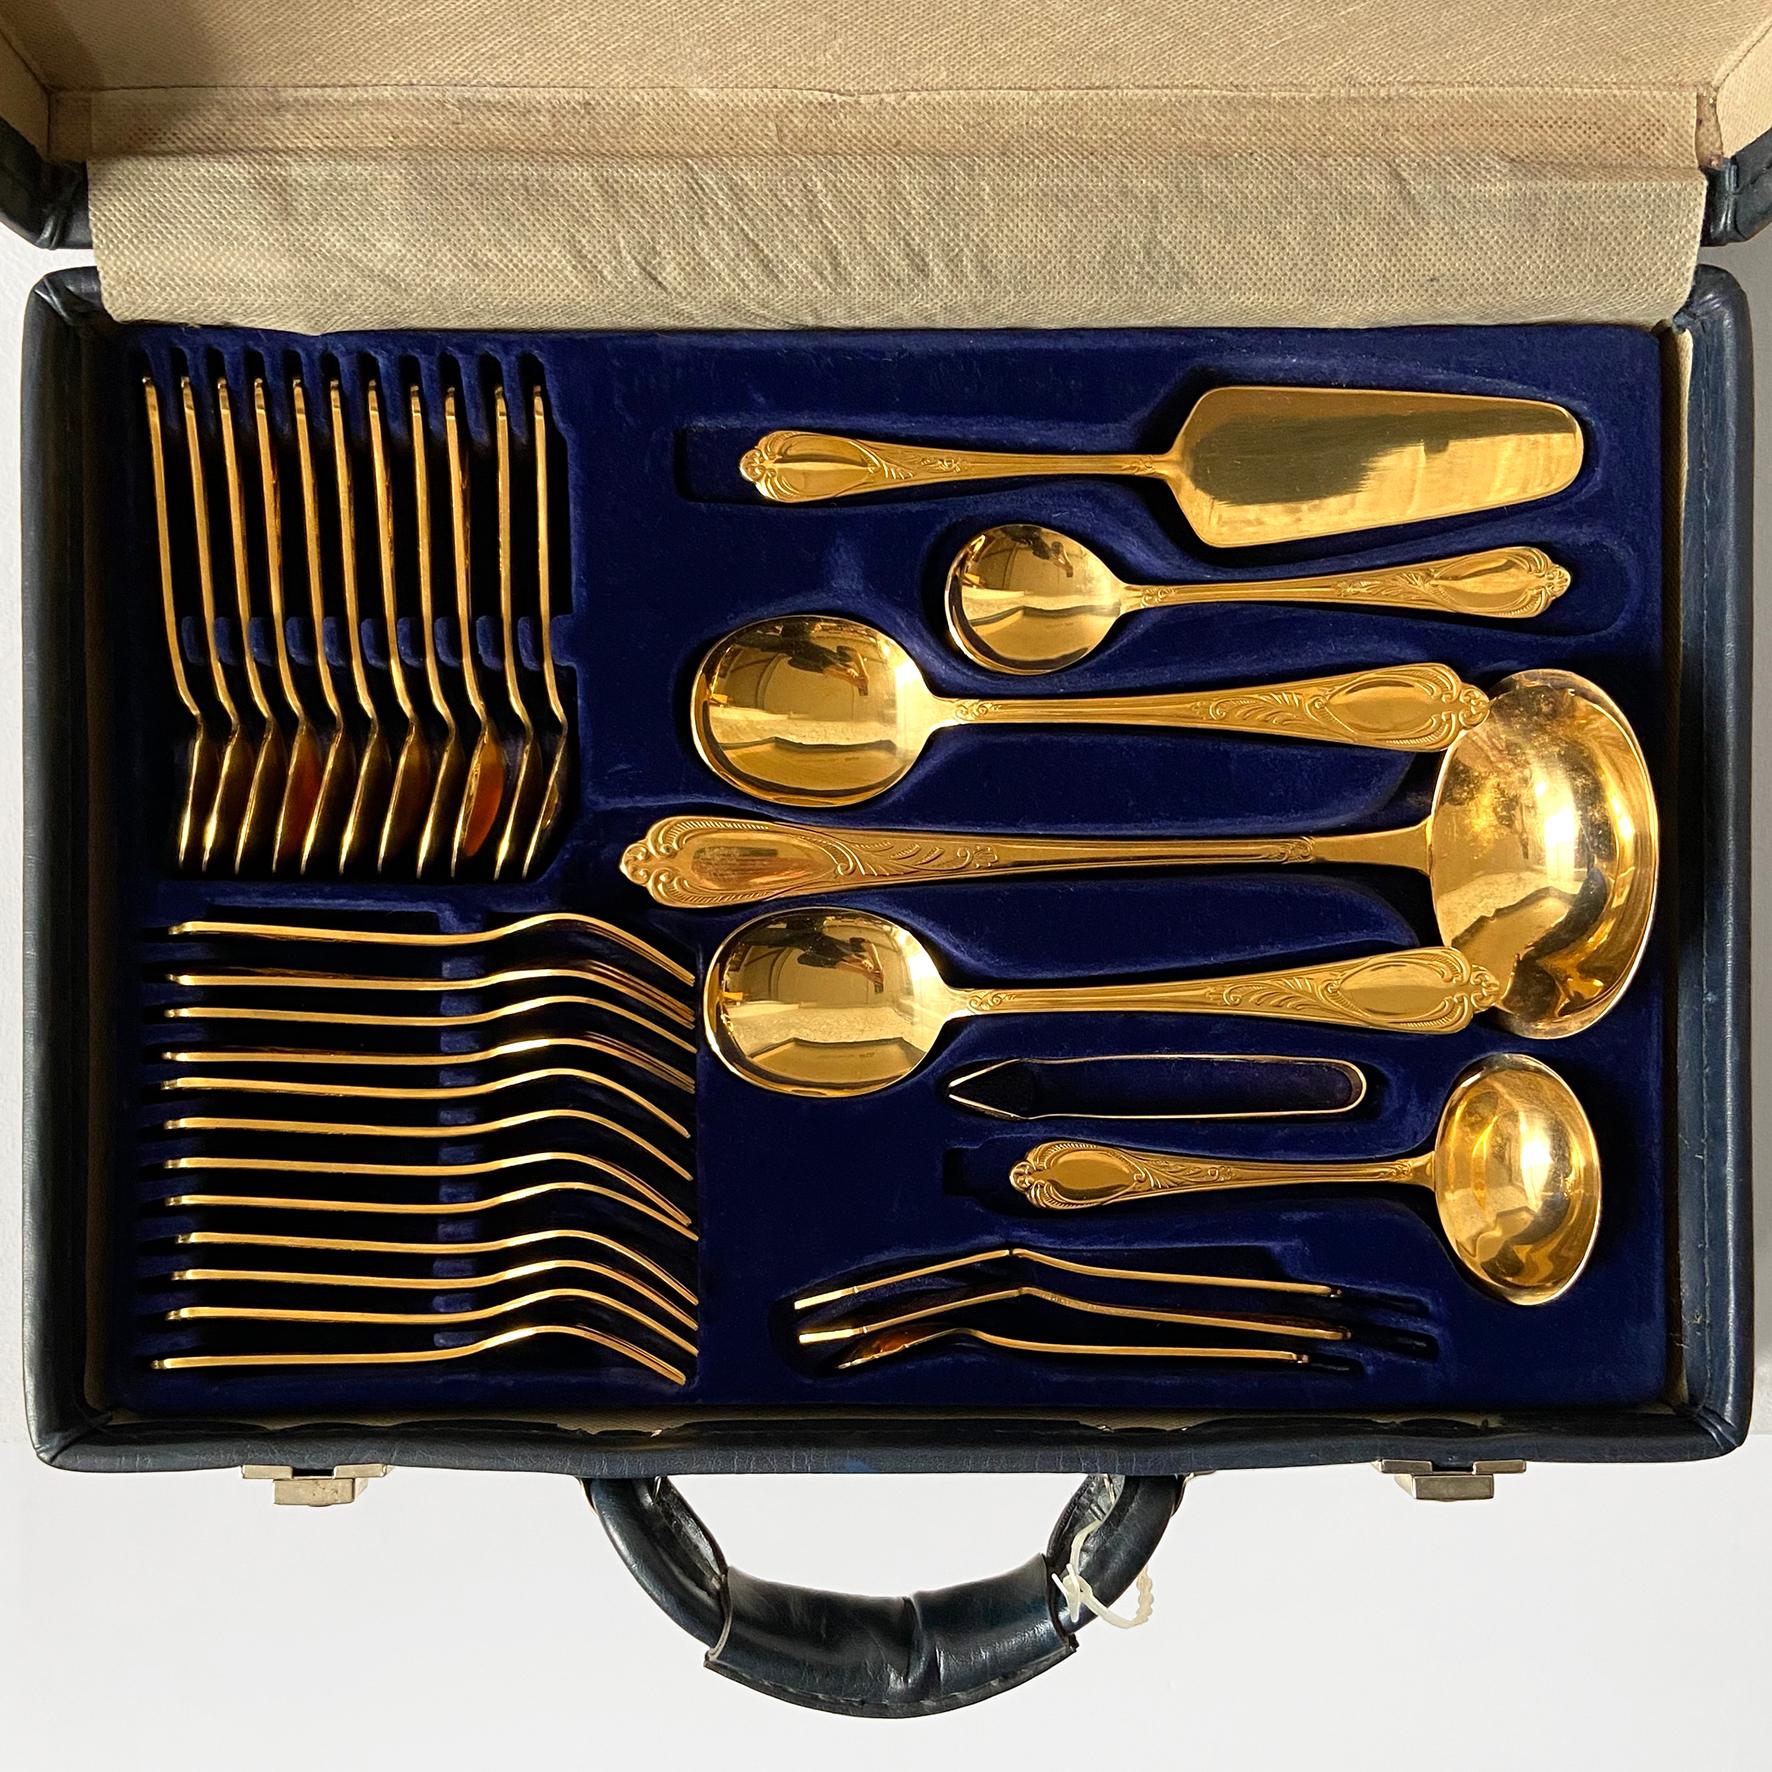 Bestecke Solingen German 23/24 Karat Gold-Plated 70pcs / 12 Person Cutlery Set For Sale 7